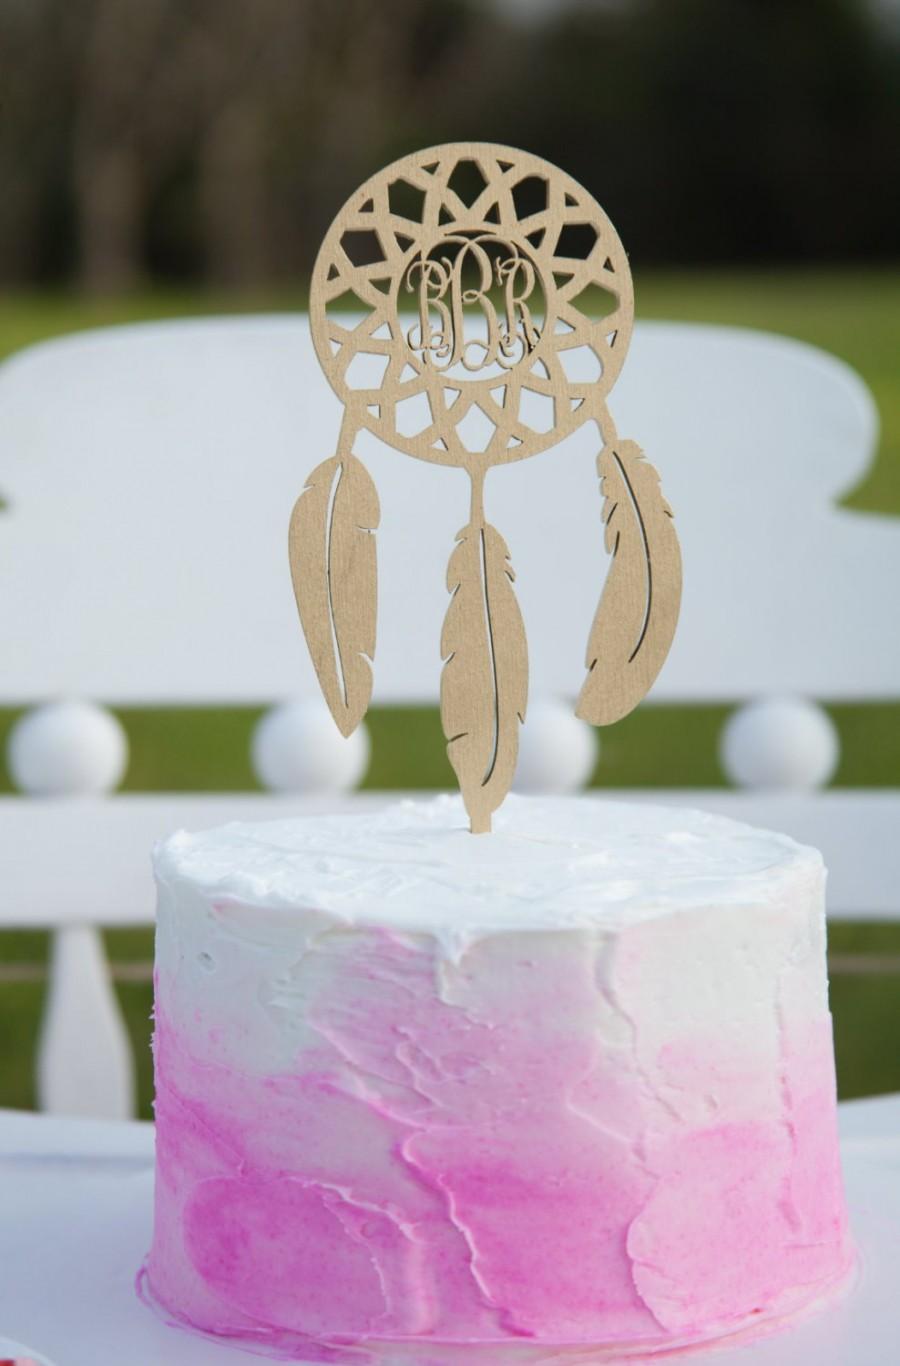 Wedding - Personalized Cake Topper - Monogram Dream Catcher Cake Topper - Birthday - Wedding - Wooden